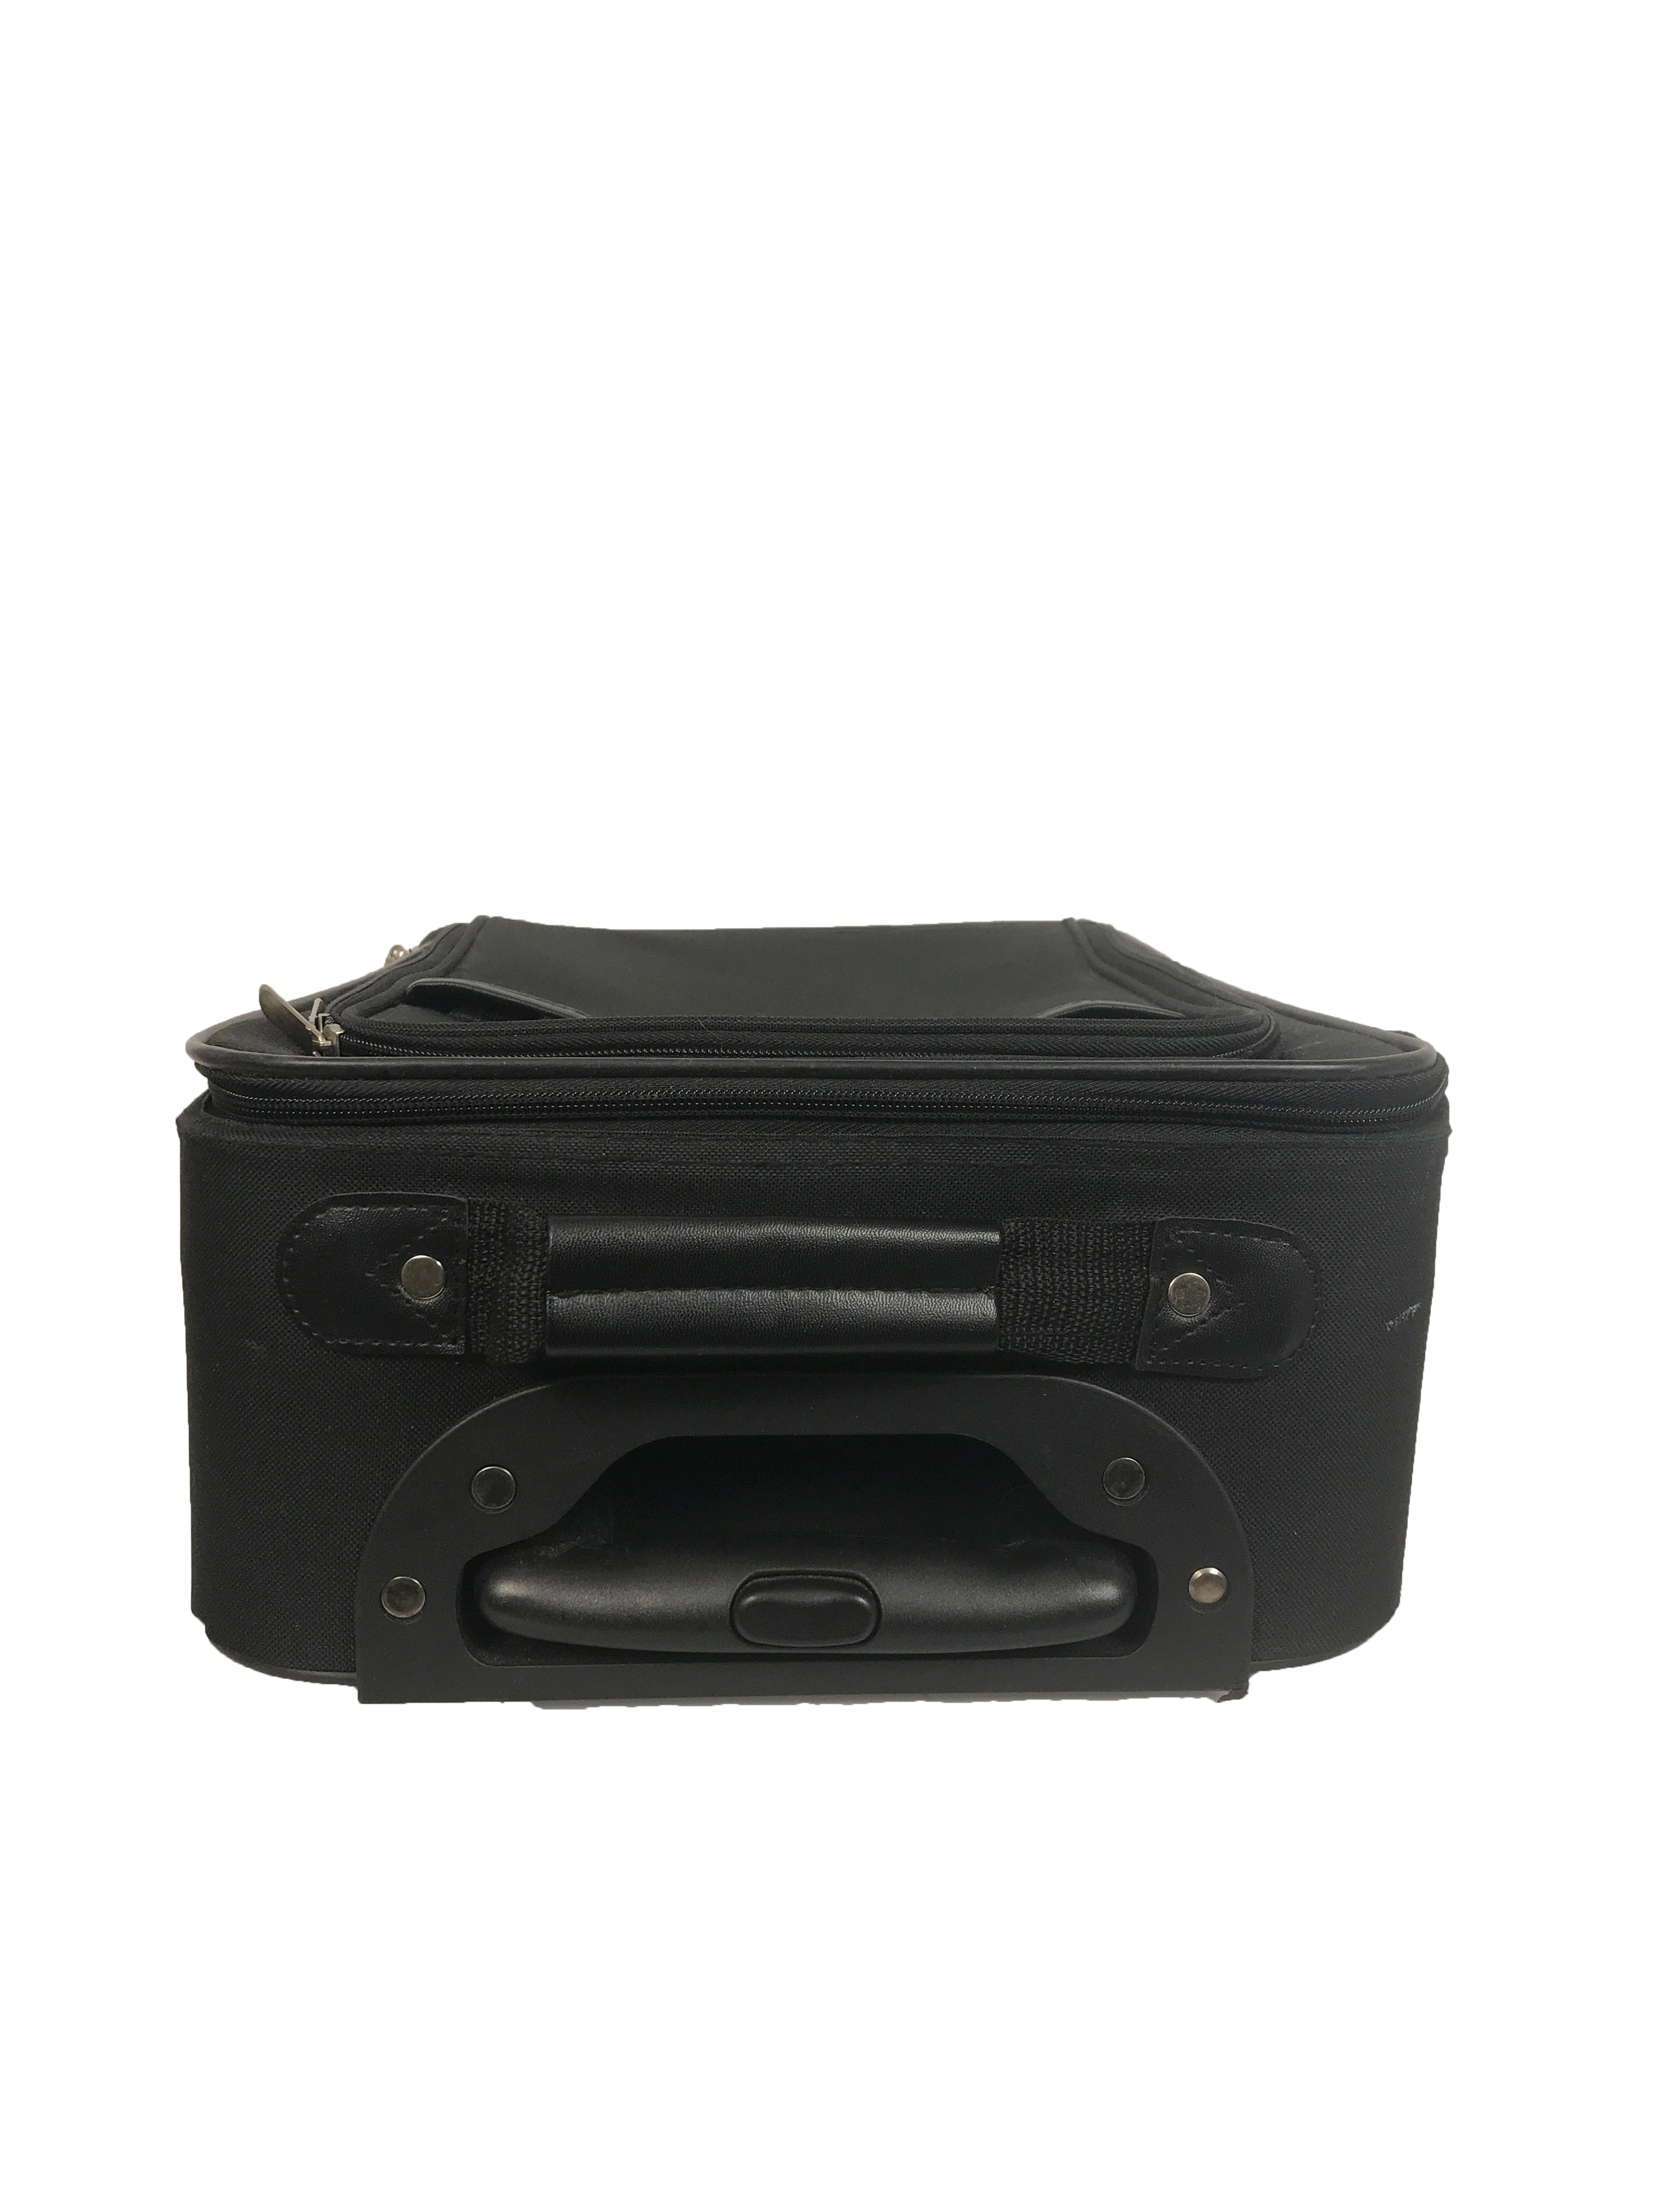 Protocol Black Rolling Suitcase